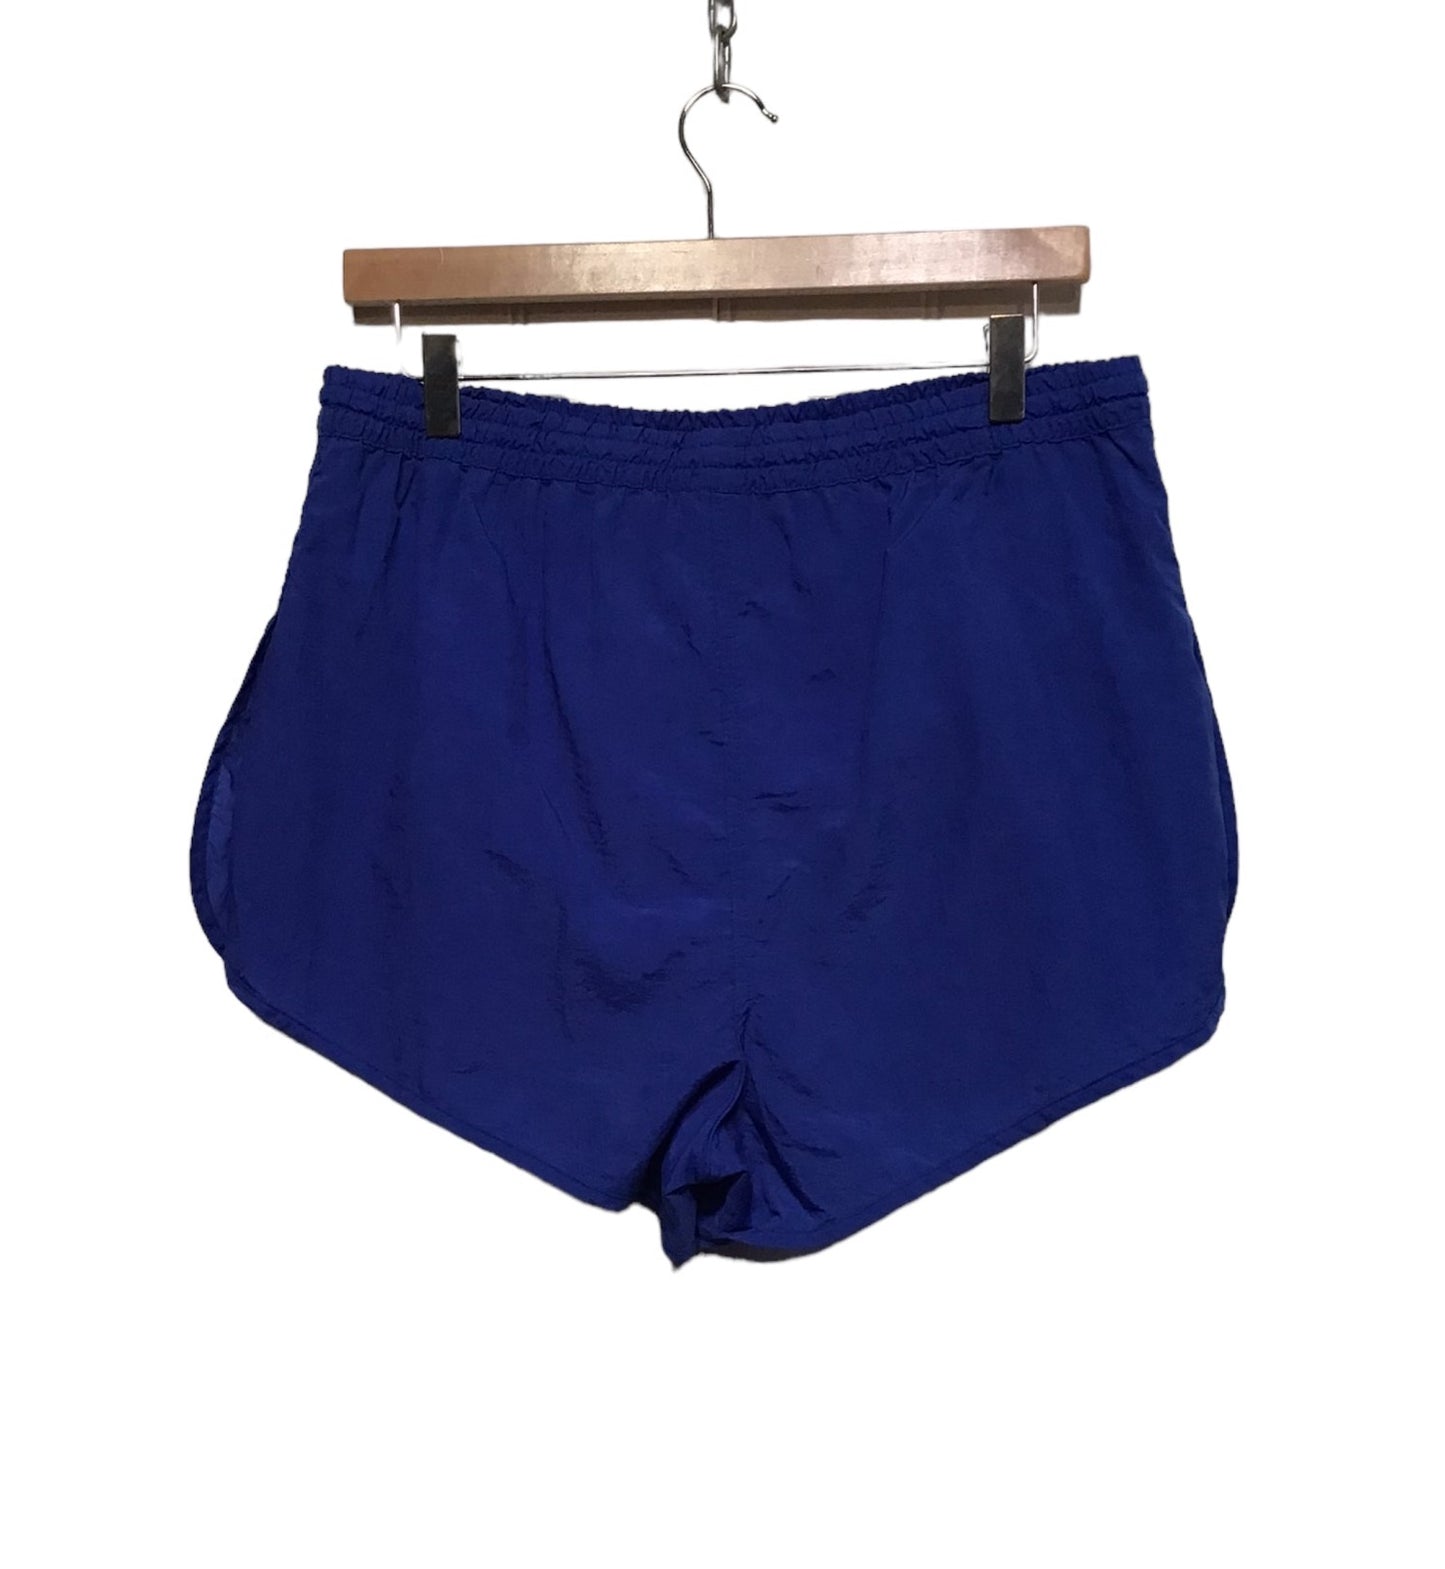 Reebok Blue Sport Shorts (Size M)